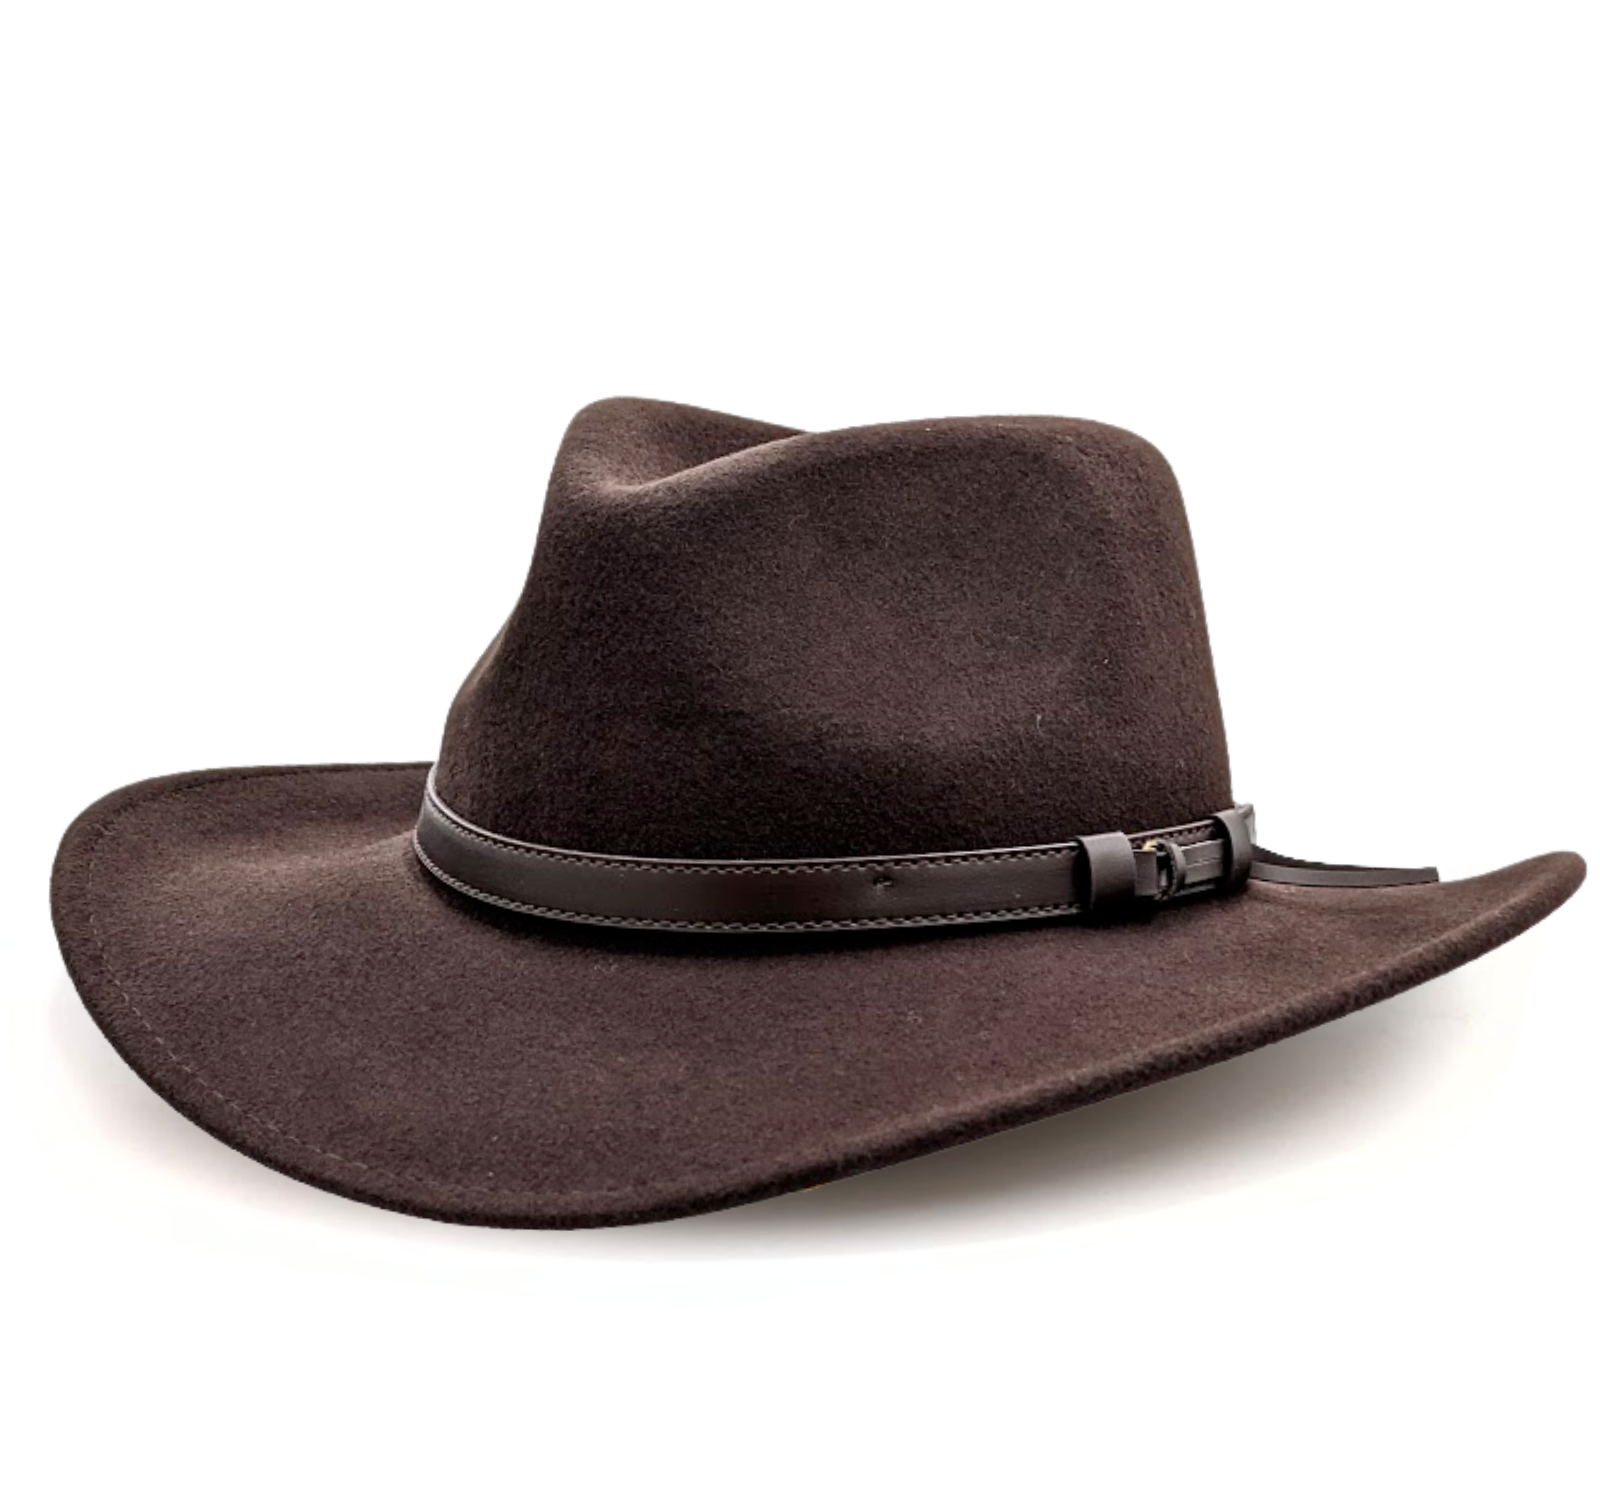 Stansmore Black Cowboy Hat